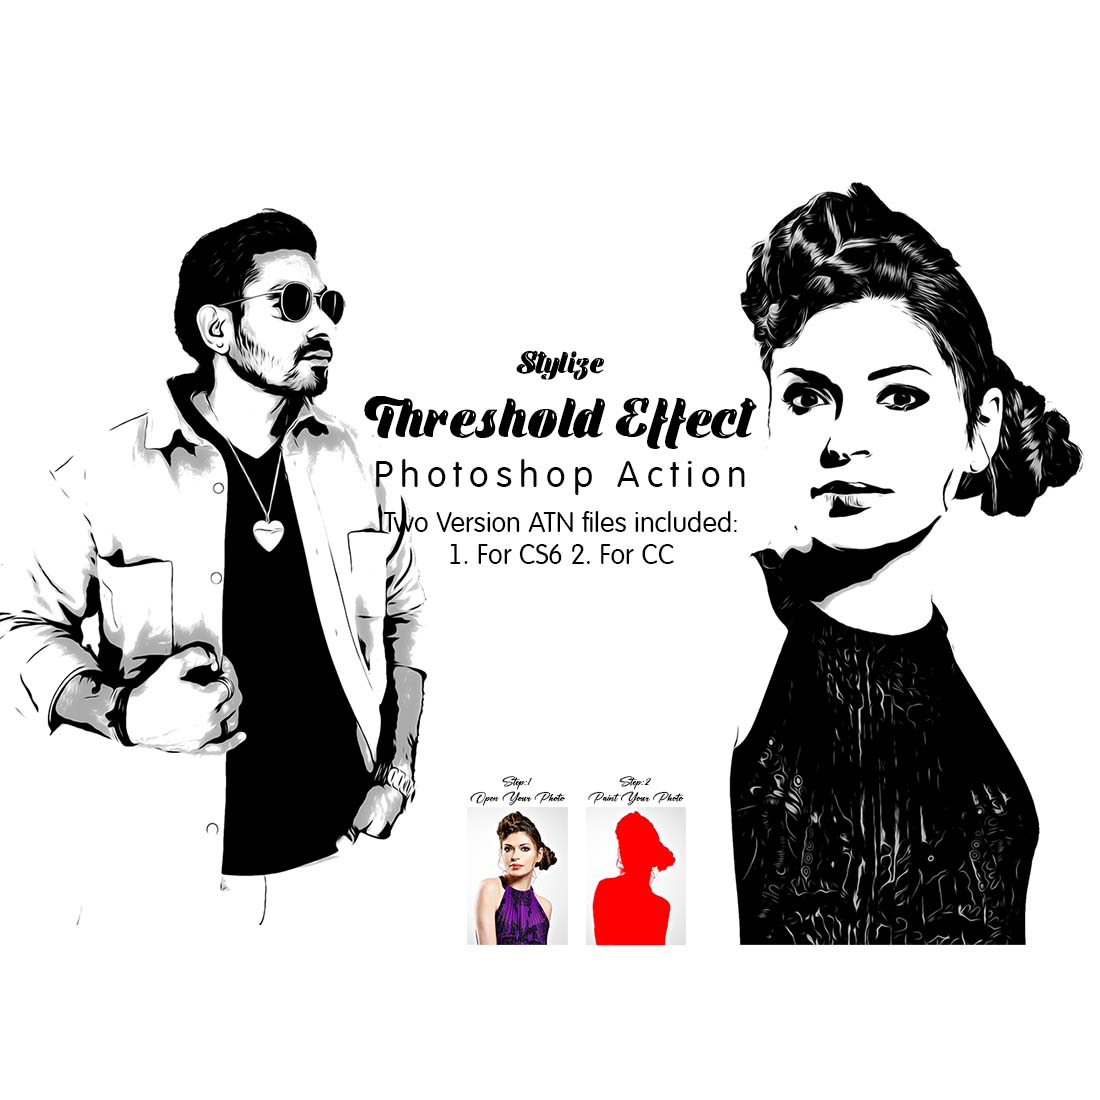 Stylize Threshold Effect Photoshop Action cover image.